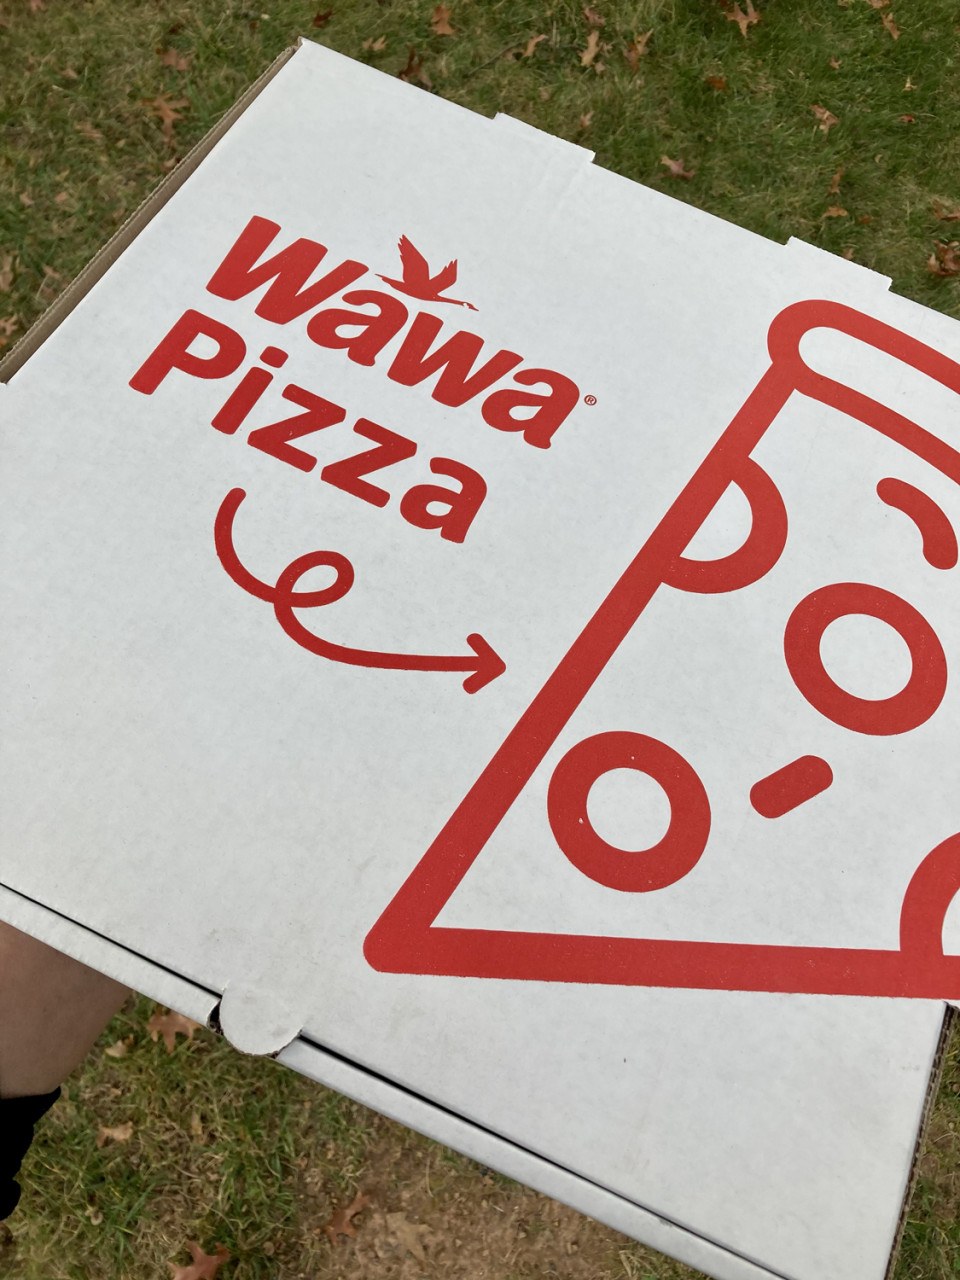 Wawa Pizza Reviews Show People Really Hate Wawa Pizza